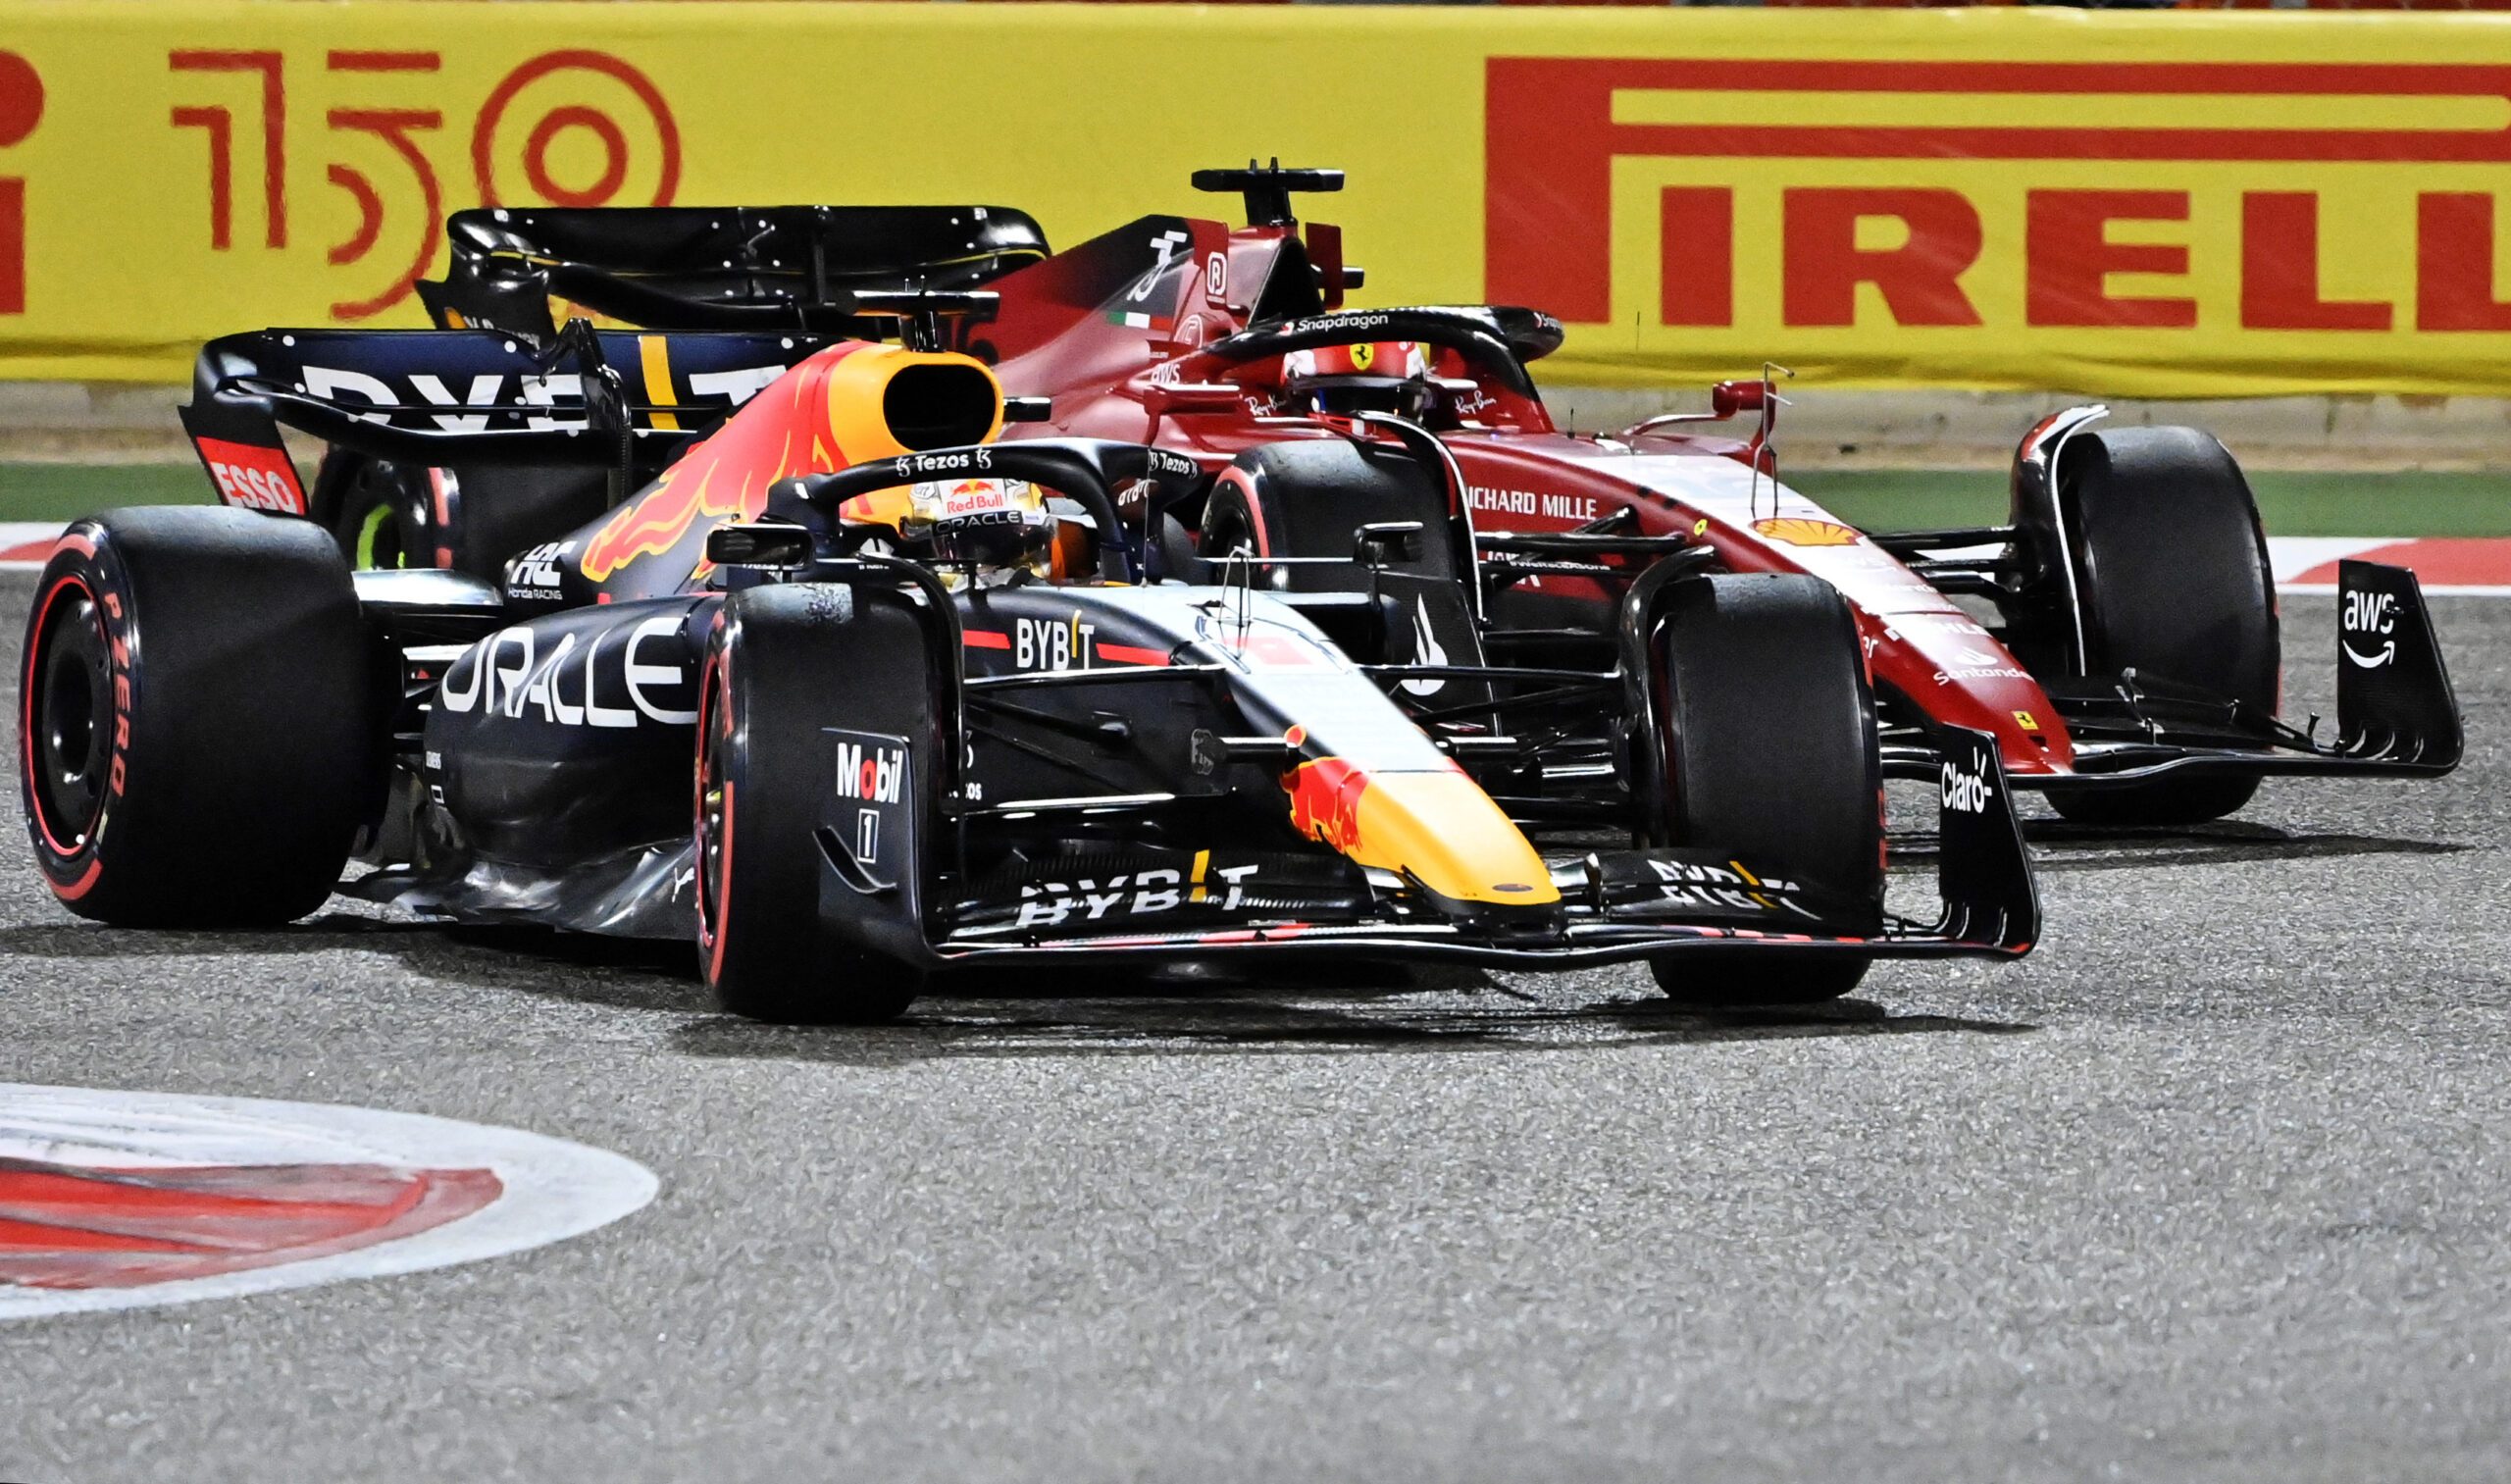 STC Saudi Arabian Grand Prix Formel 1 live im kostenlosen Livestream und TV